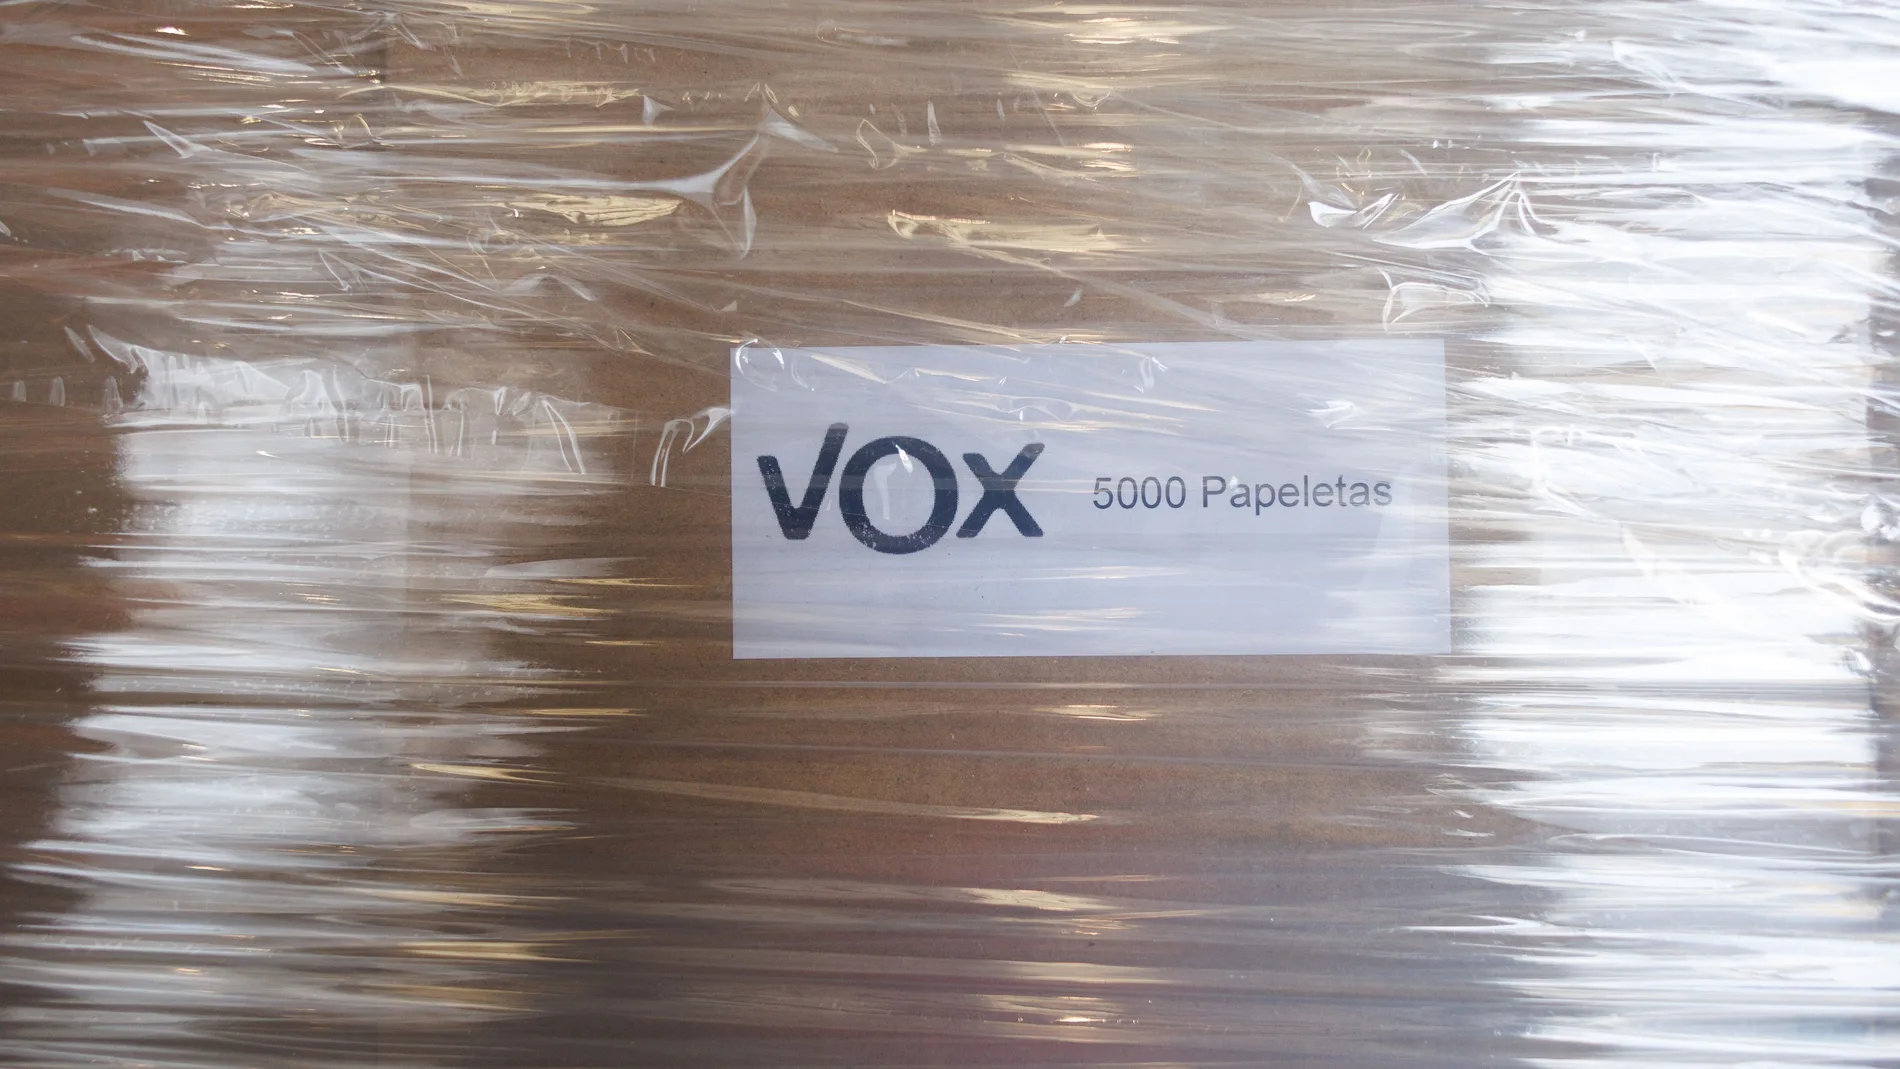 Un caja empaquetada con 5000 papeletas de VOX 